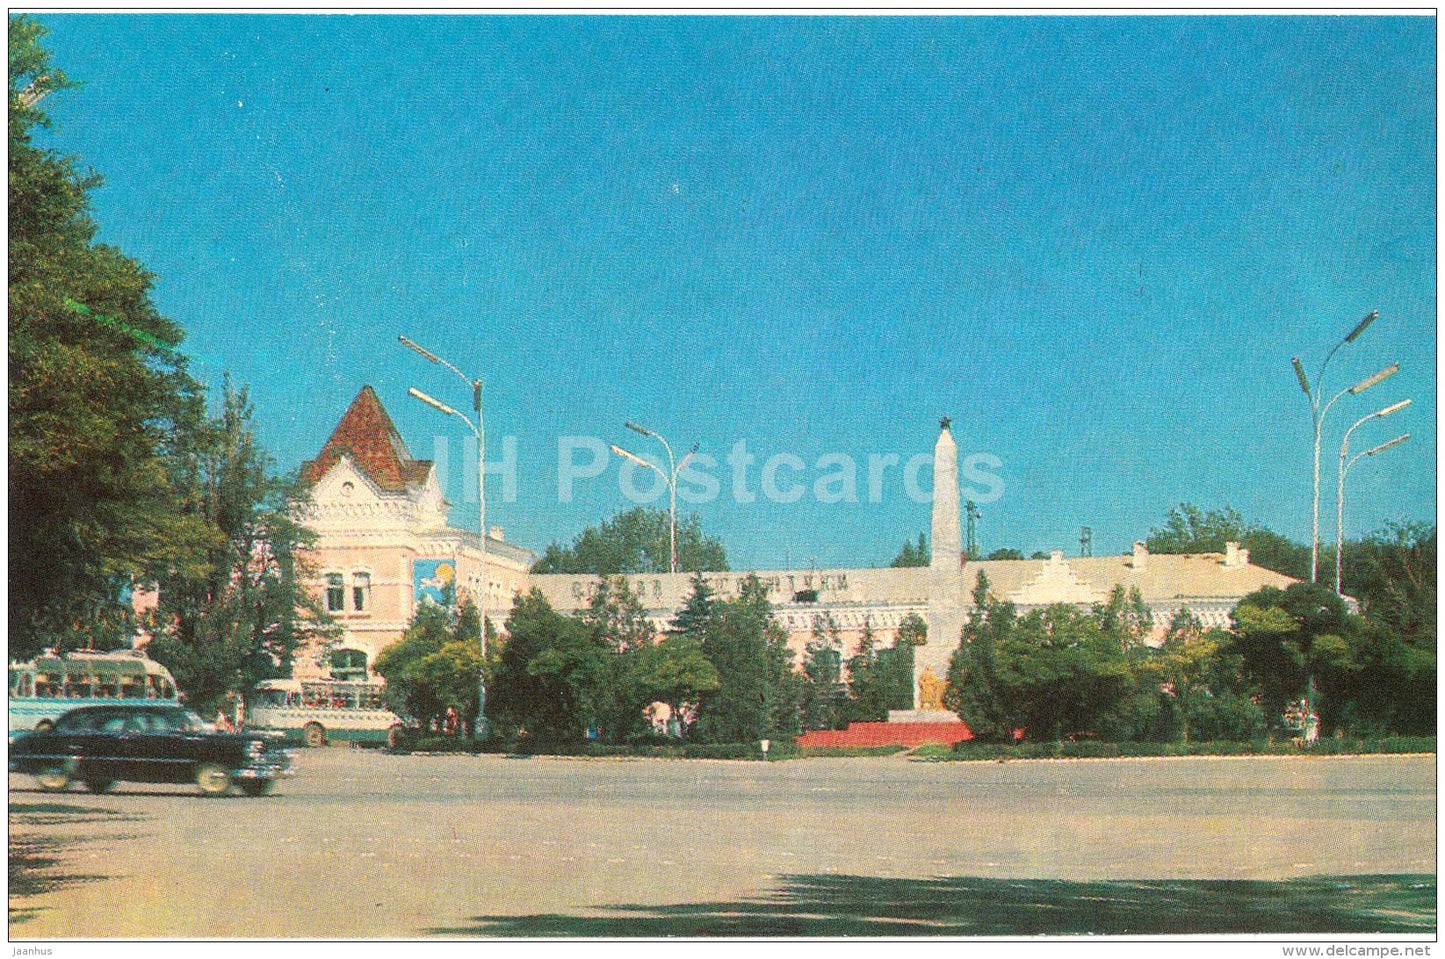 railway station square - Yessentuki - Caucasus - 1971 - Russia USSR - unused - JH Postcards